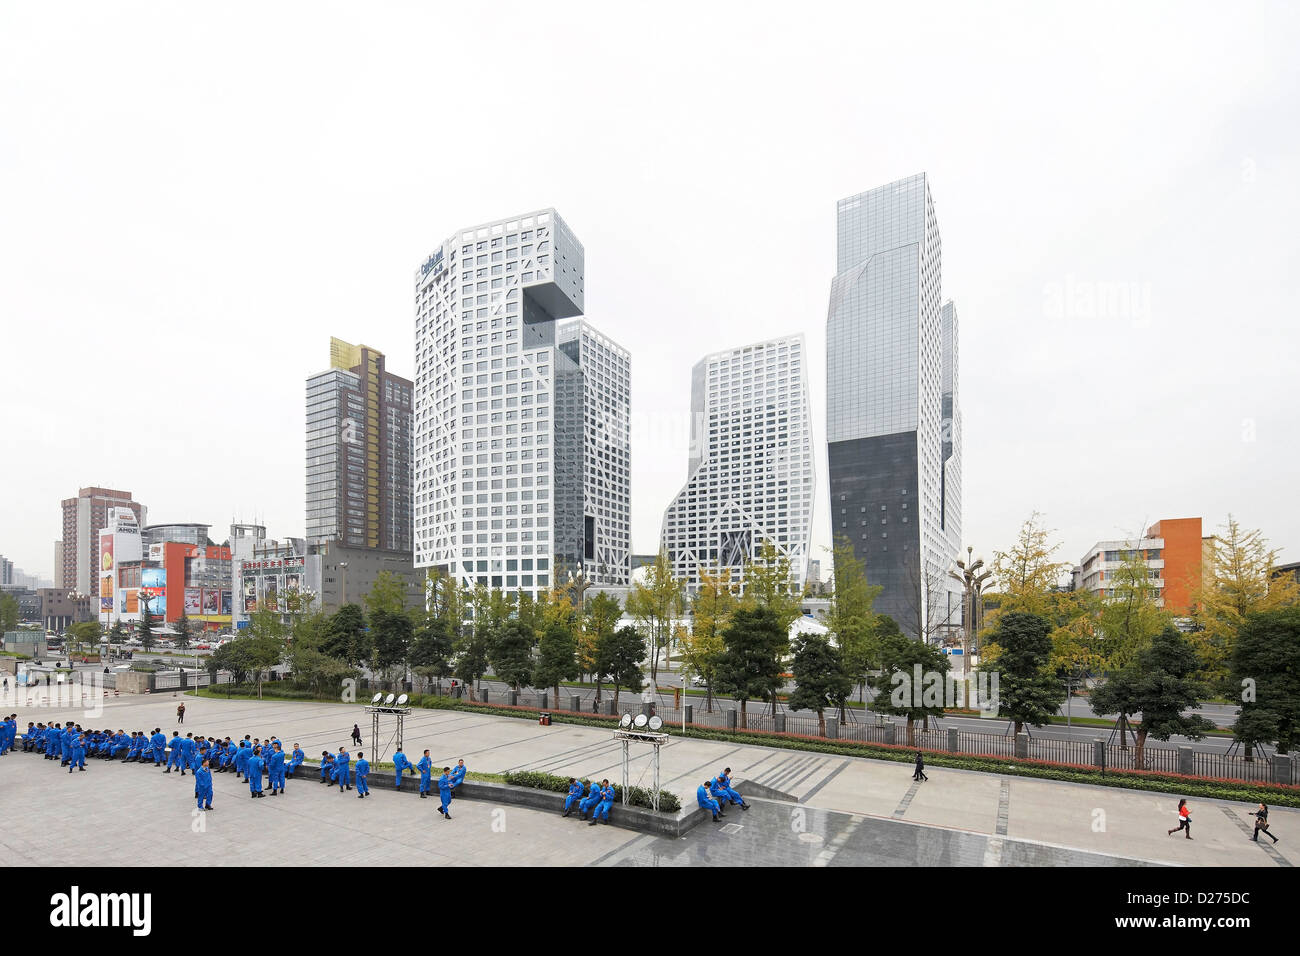 Bloque de porosidad en rodajas, Chengdu, China. Arquitecto: Steven Holl Architects, en 2013. Foto de stock